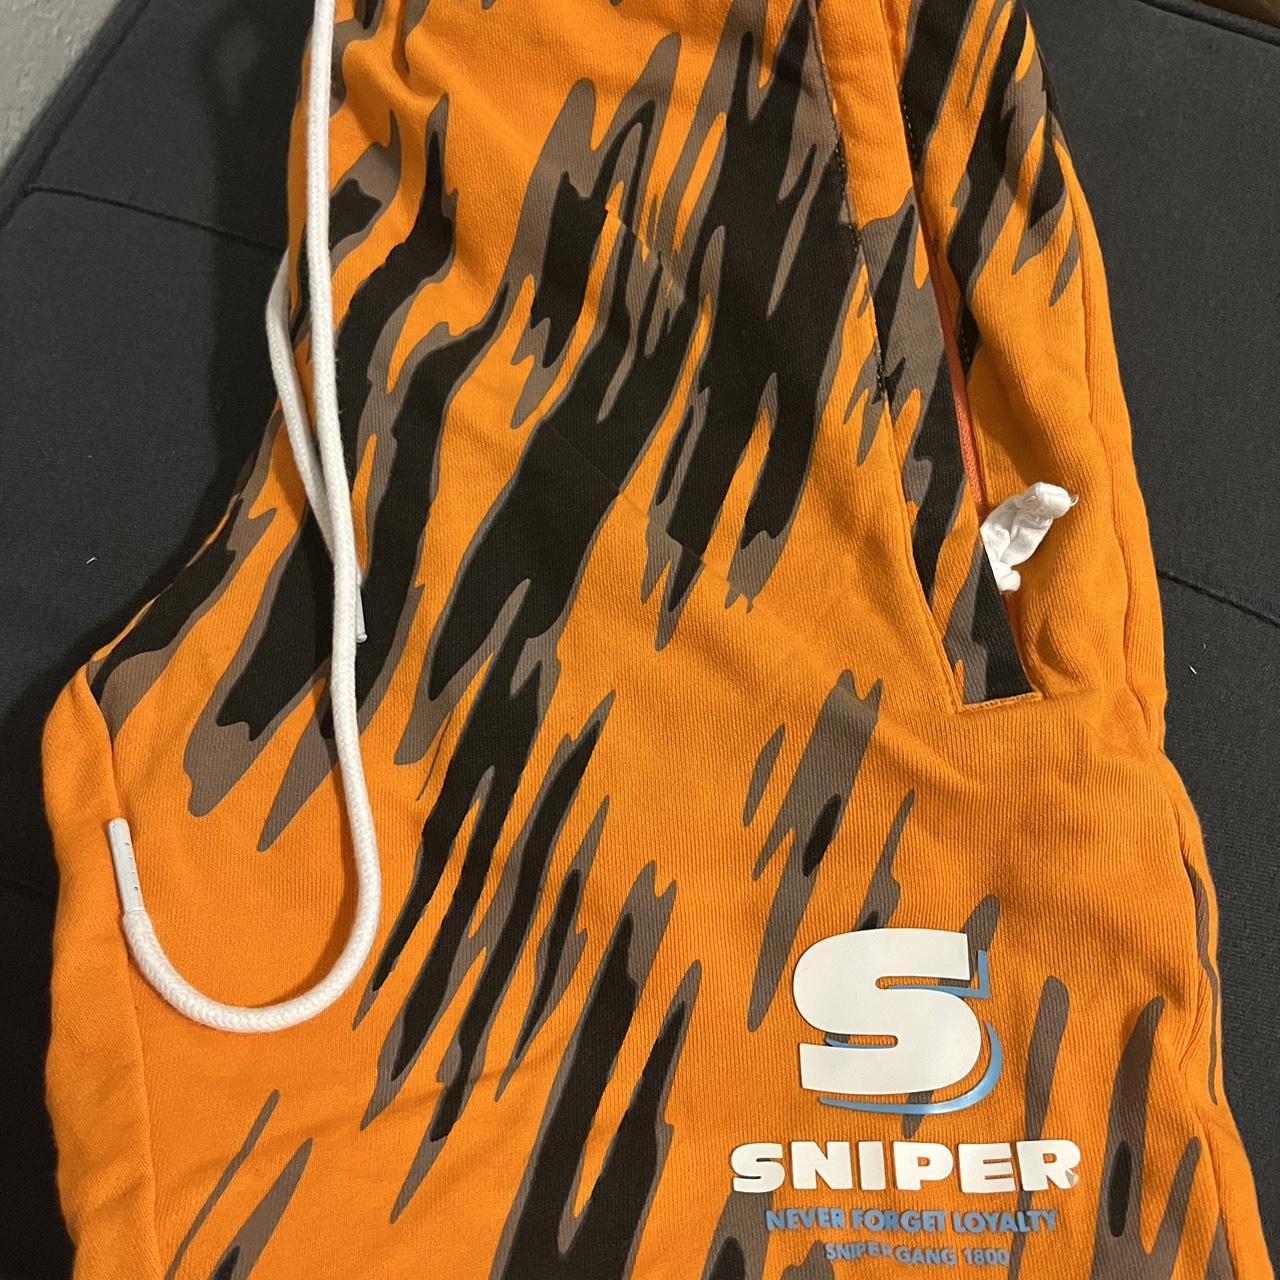 Sniper gang, orange pattern sweatpants I will send... - Depop